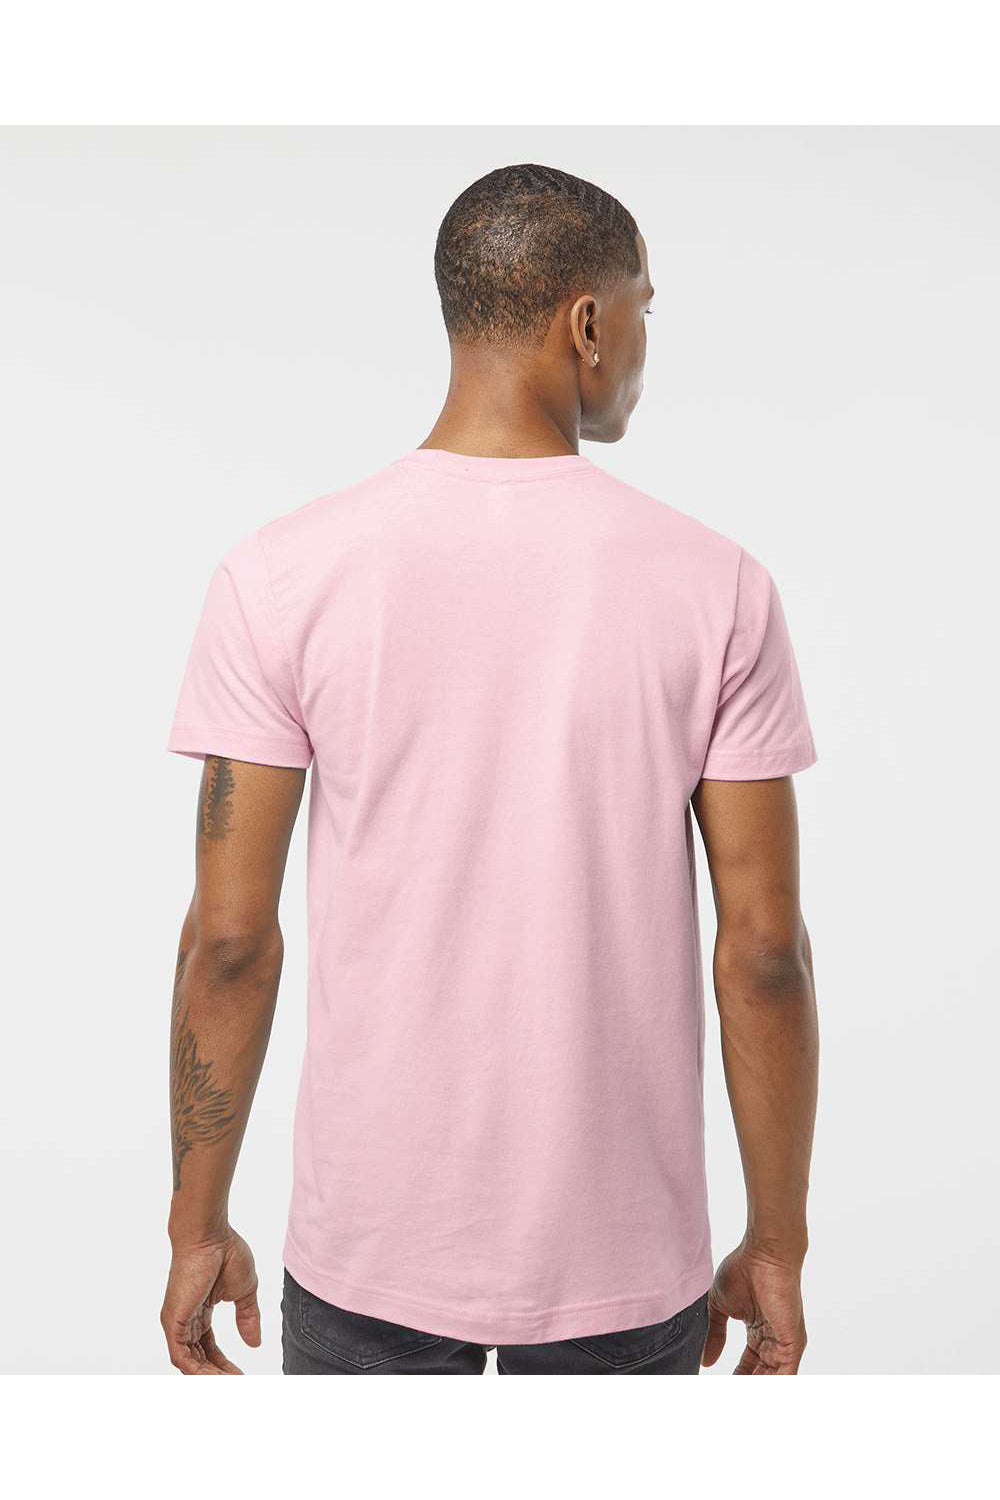 Tultex 202 Mens Fine Jersey Short Sleeve Crewneck T-Shirt Pink Model Back